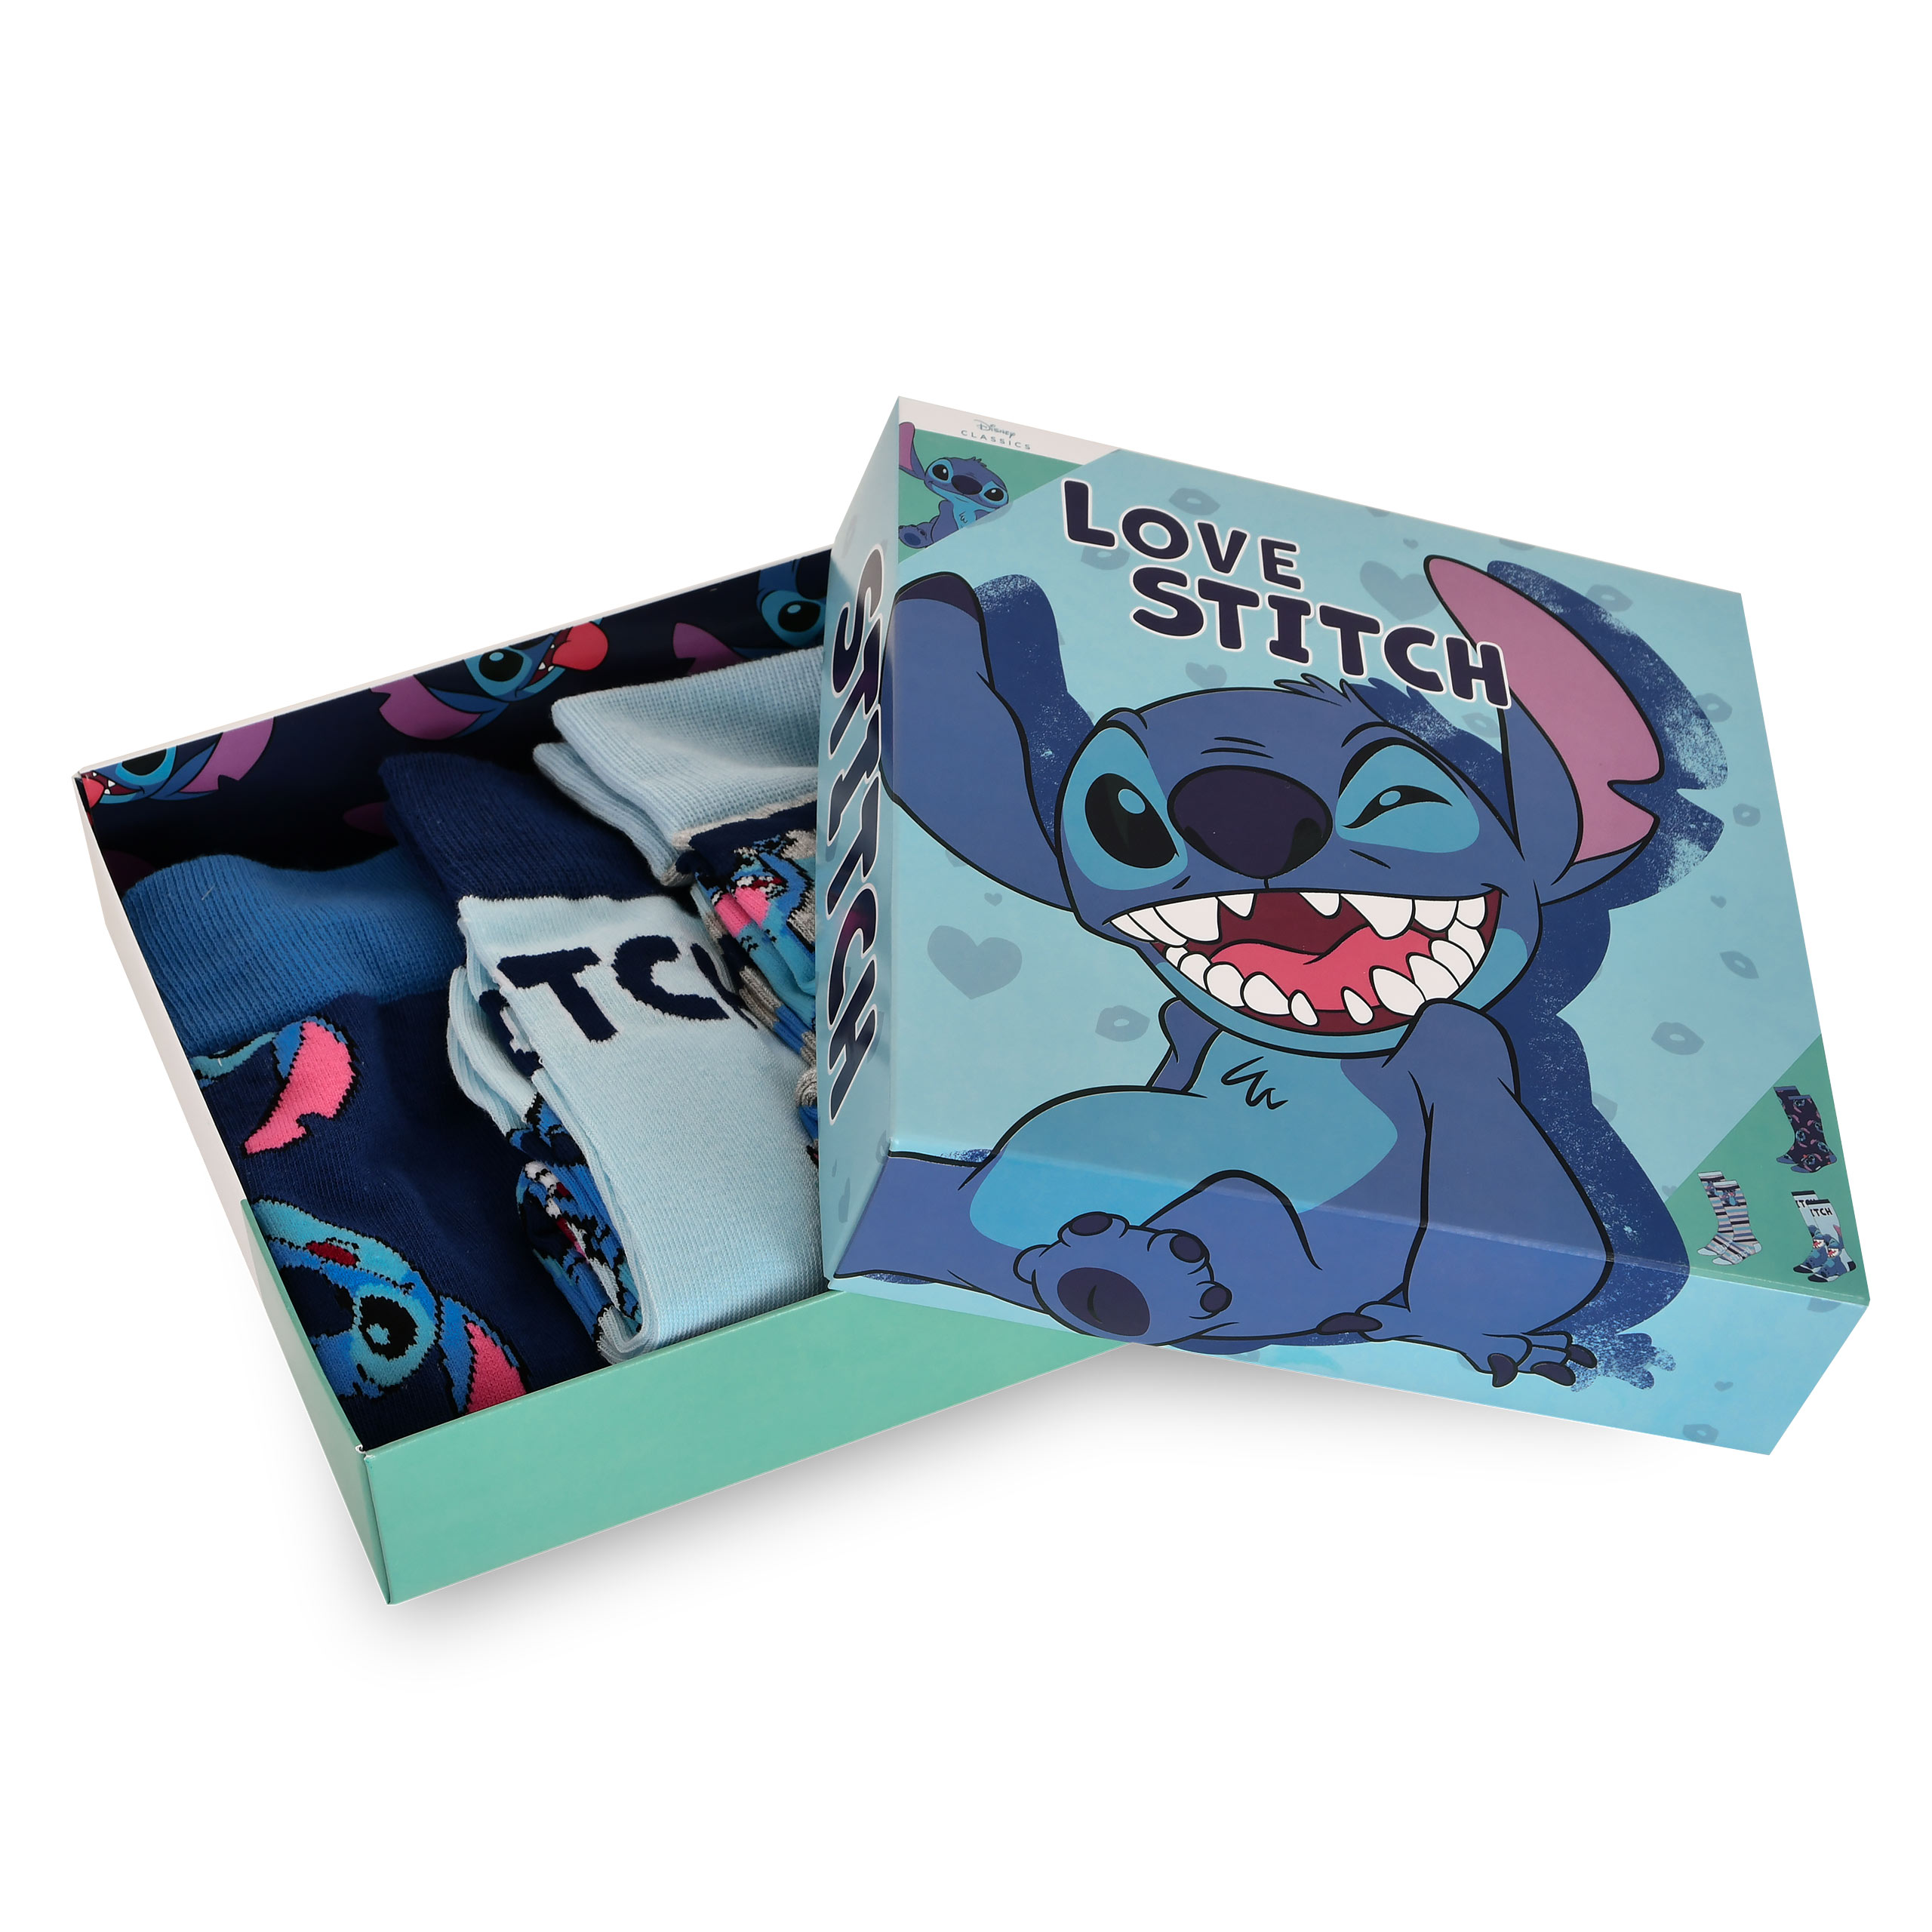 Lilo & Stitch - Socken 3er Set Stitch